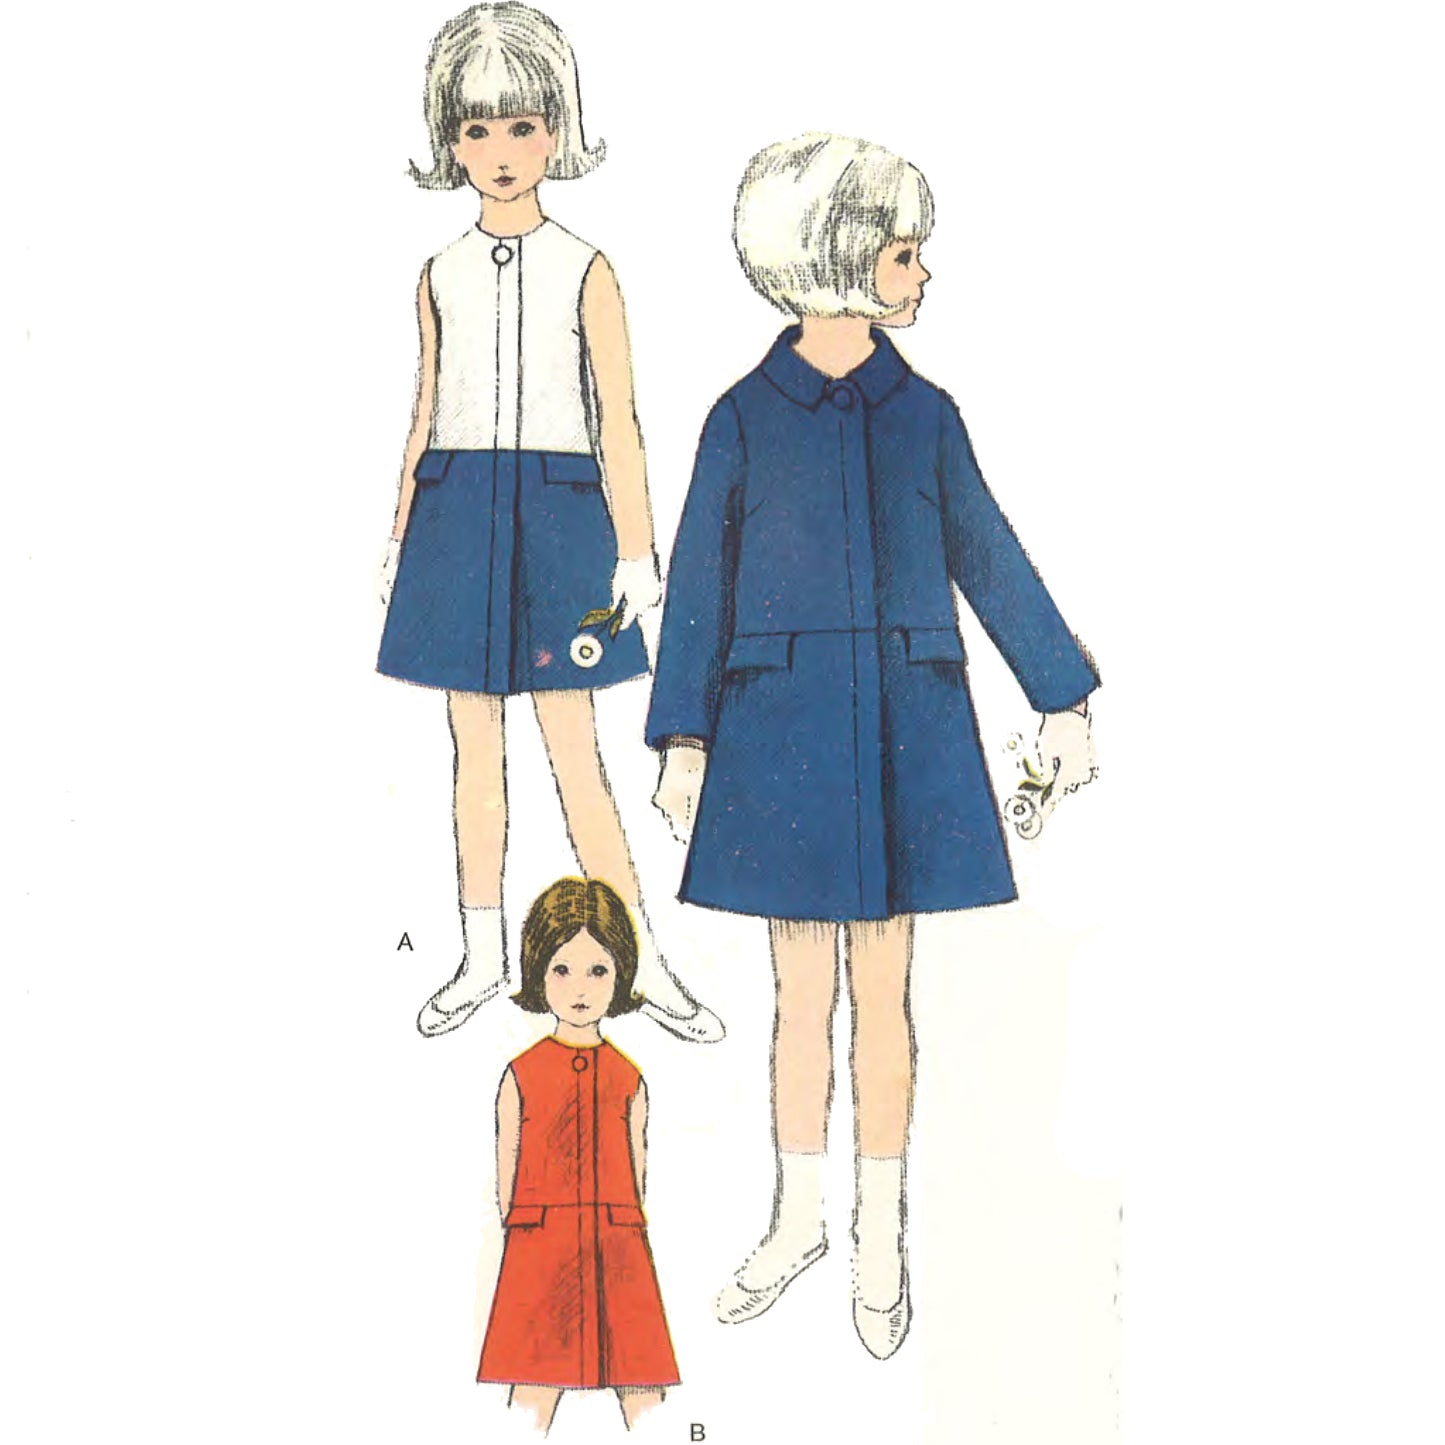 Little girls wearing mod style jackets. Upper left, girl in short sleeve jacket with white body and navy skirt. Lower left, girl in short sleeve red jacket. Right, girl in long sleeve navy jacket.